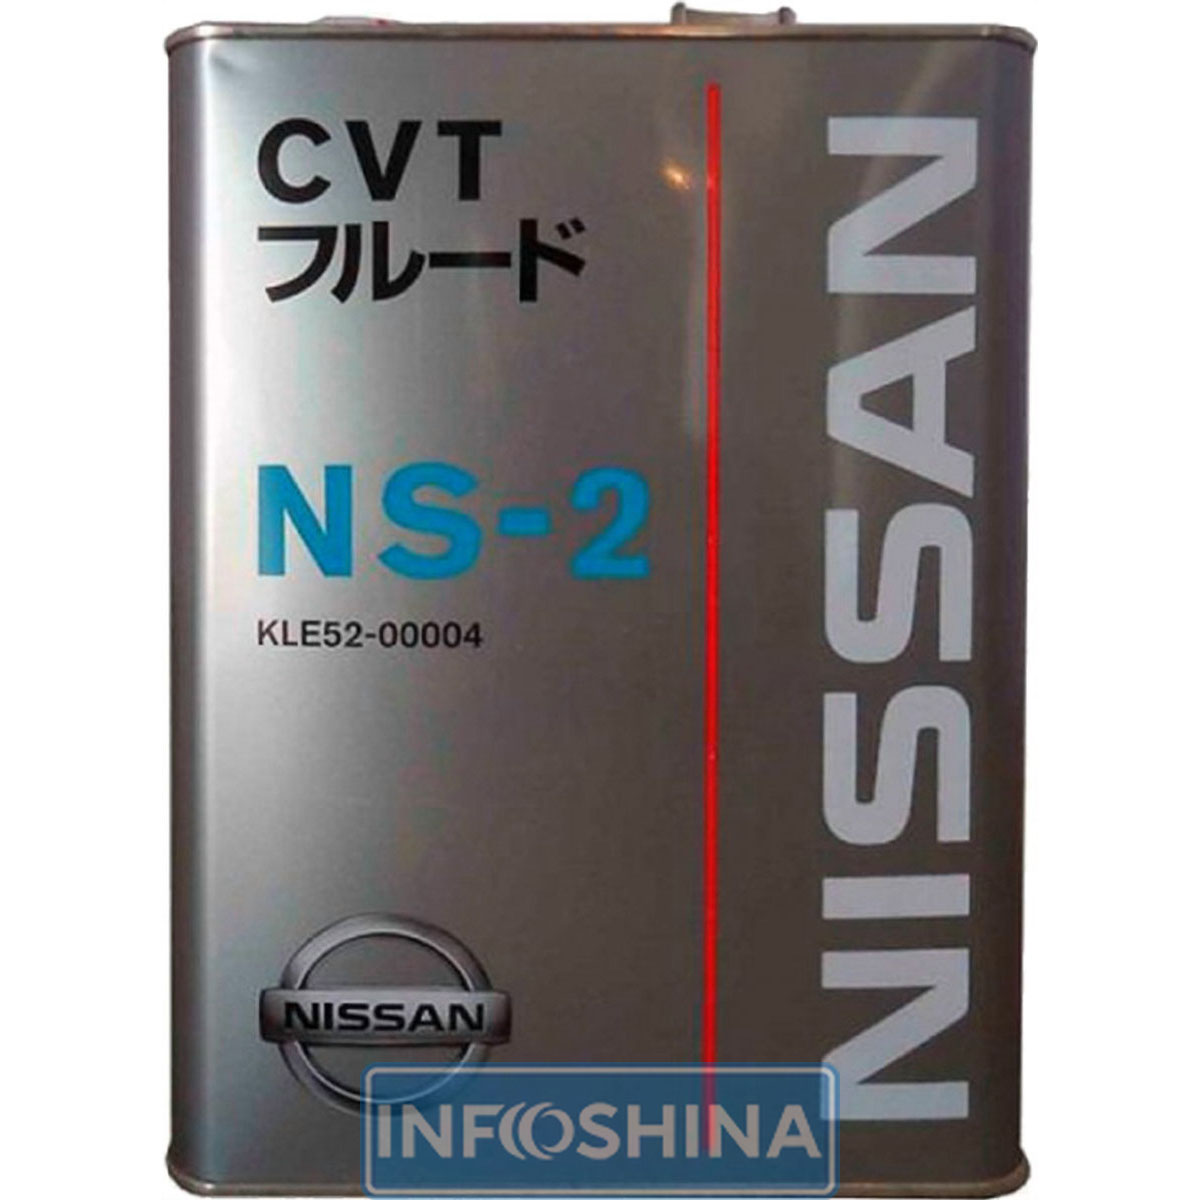 Nissan CVT NS-2